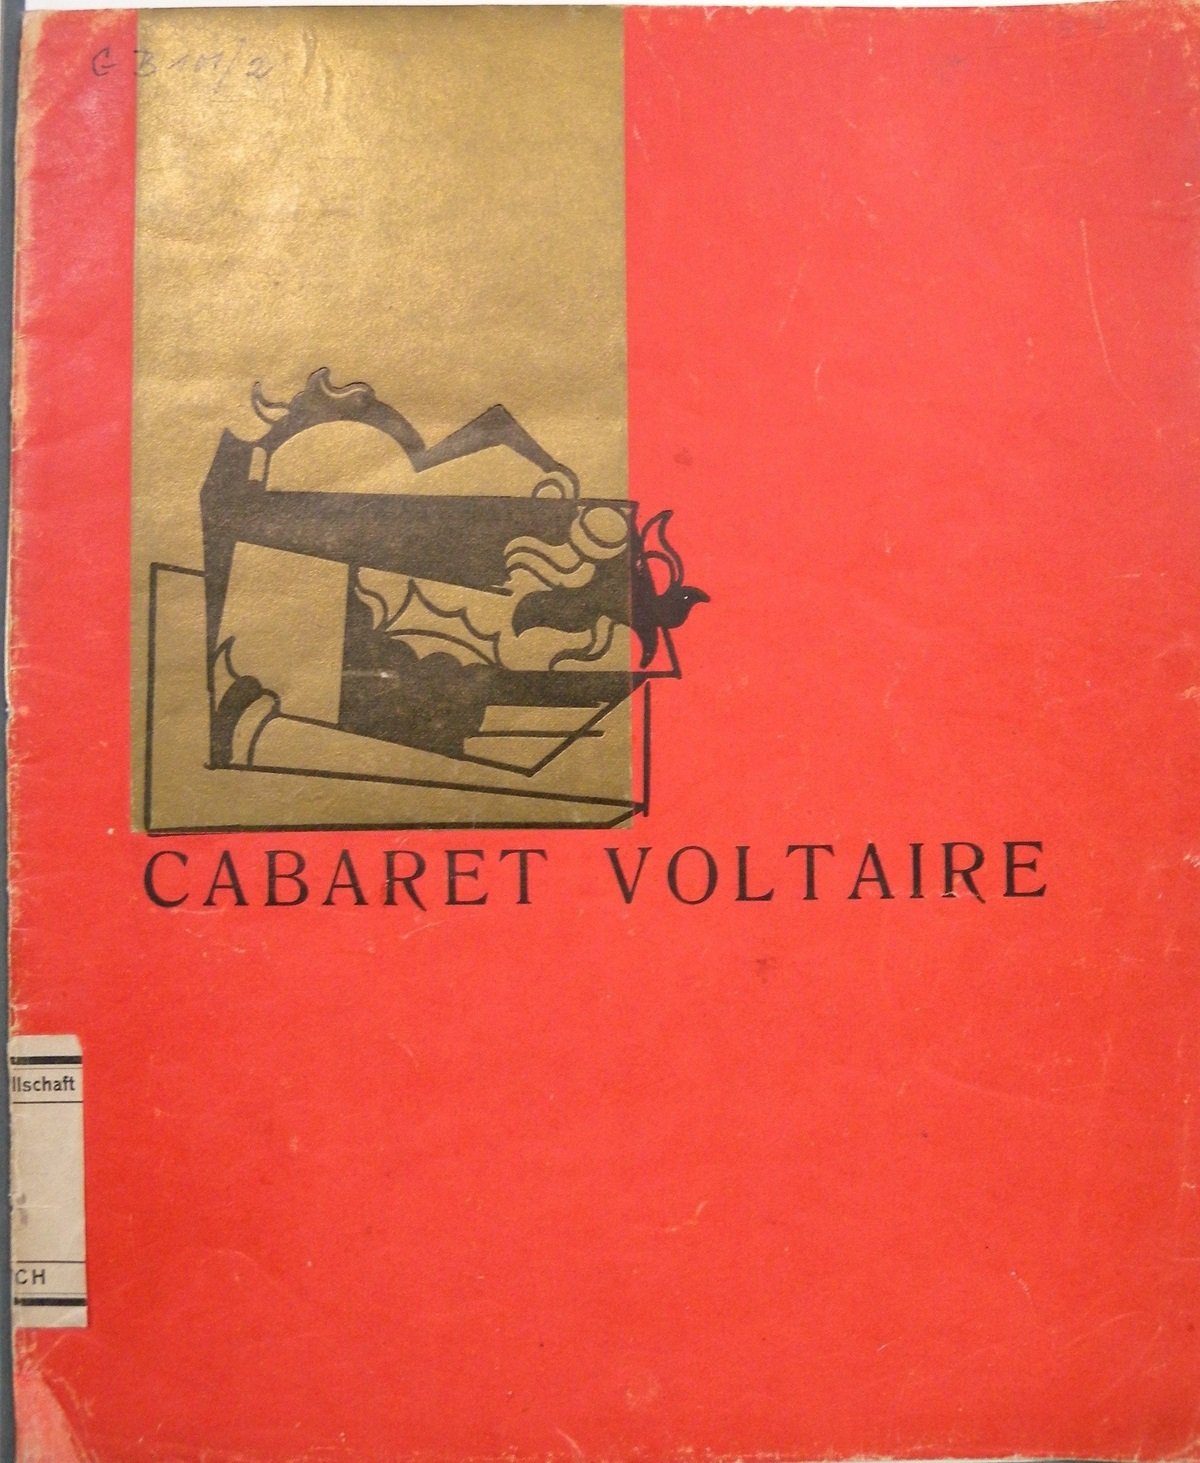 Cabaret Voltaire. Recueil littéraire et artistique. A cura di Hugo Ball, Zurigo 1916. Illustrazione in copertina di Hans Arp © 2016 ProLitteris, Zürich